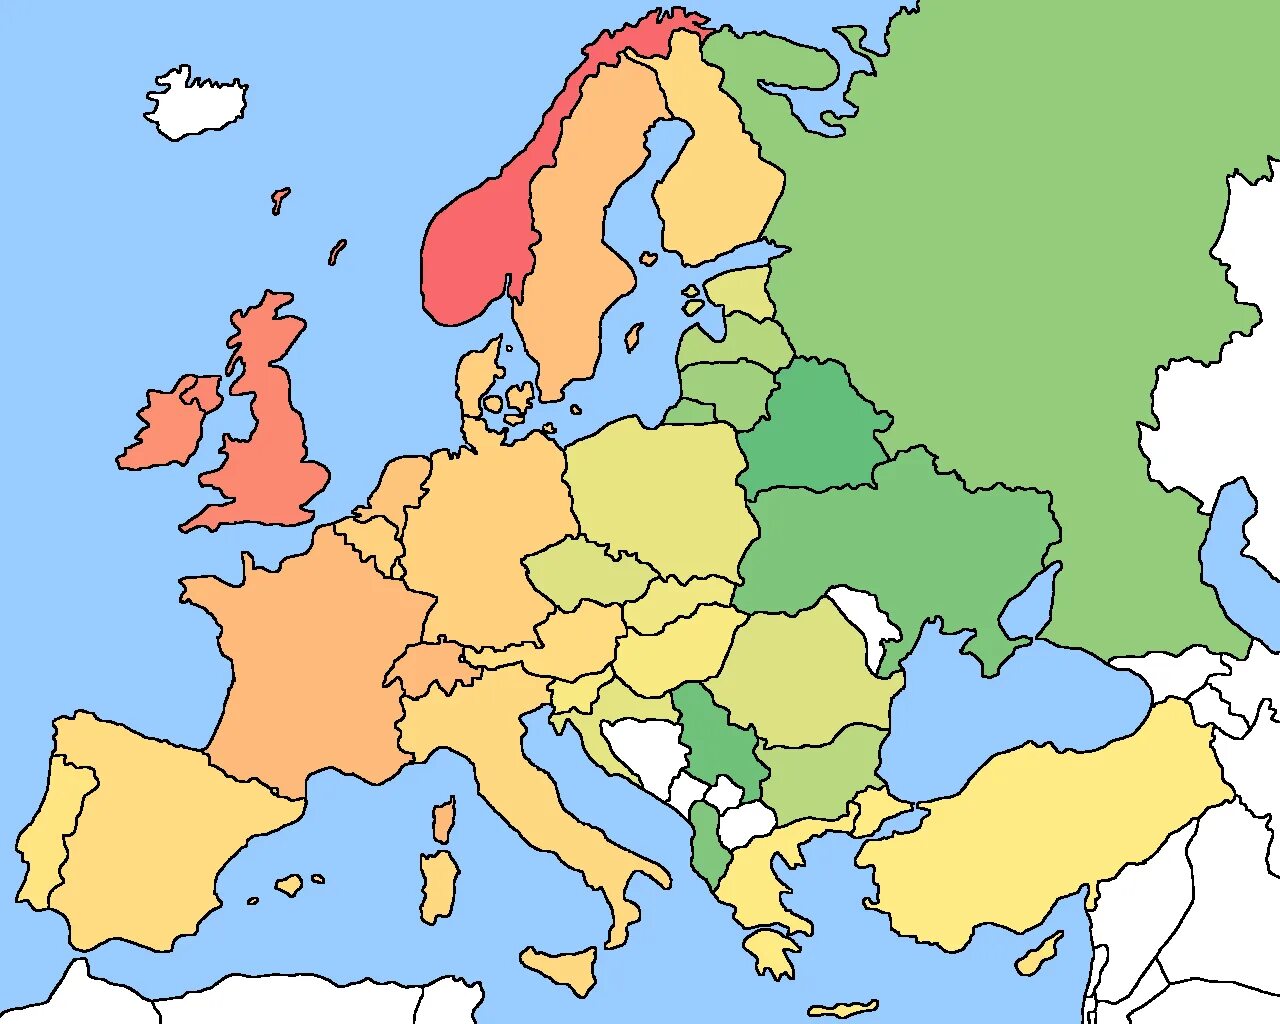 Europa und. Карта Европы без названий стран. Политическая карта Европы без названий. Прлитическая карат Европы без названий. Политическая карта Европы без стран.